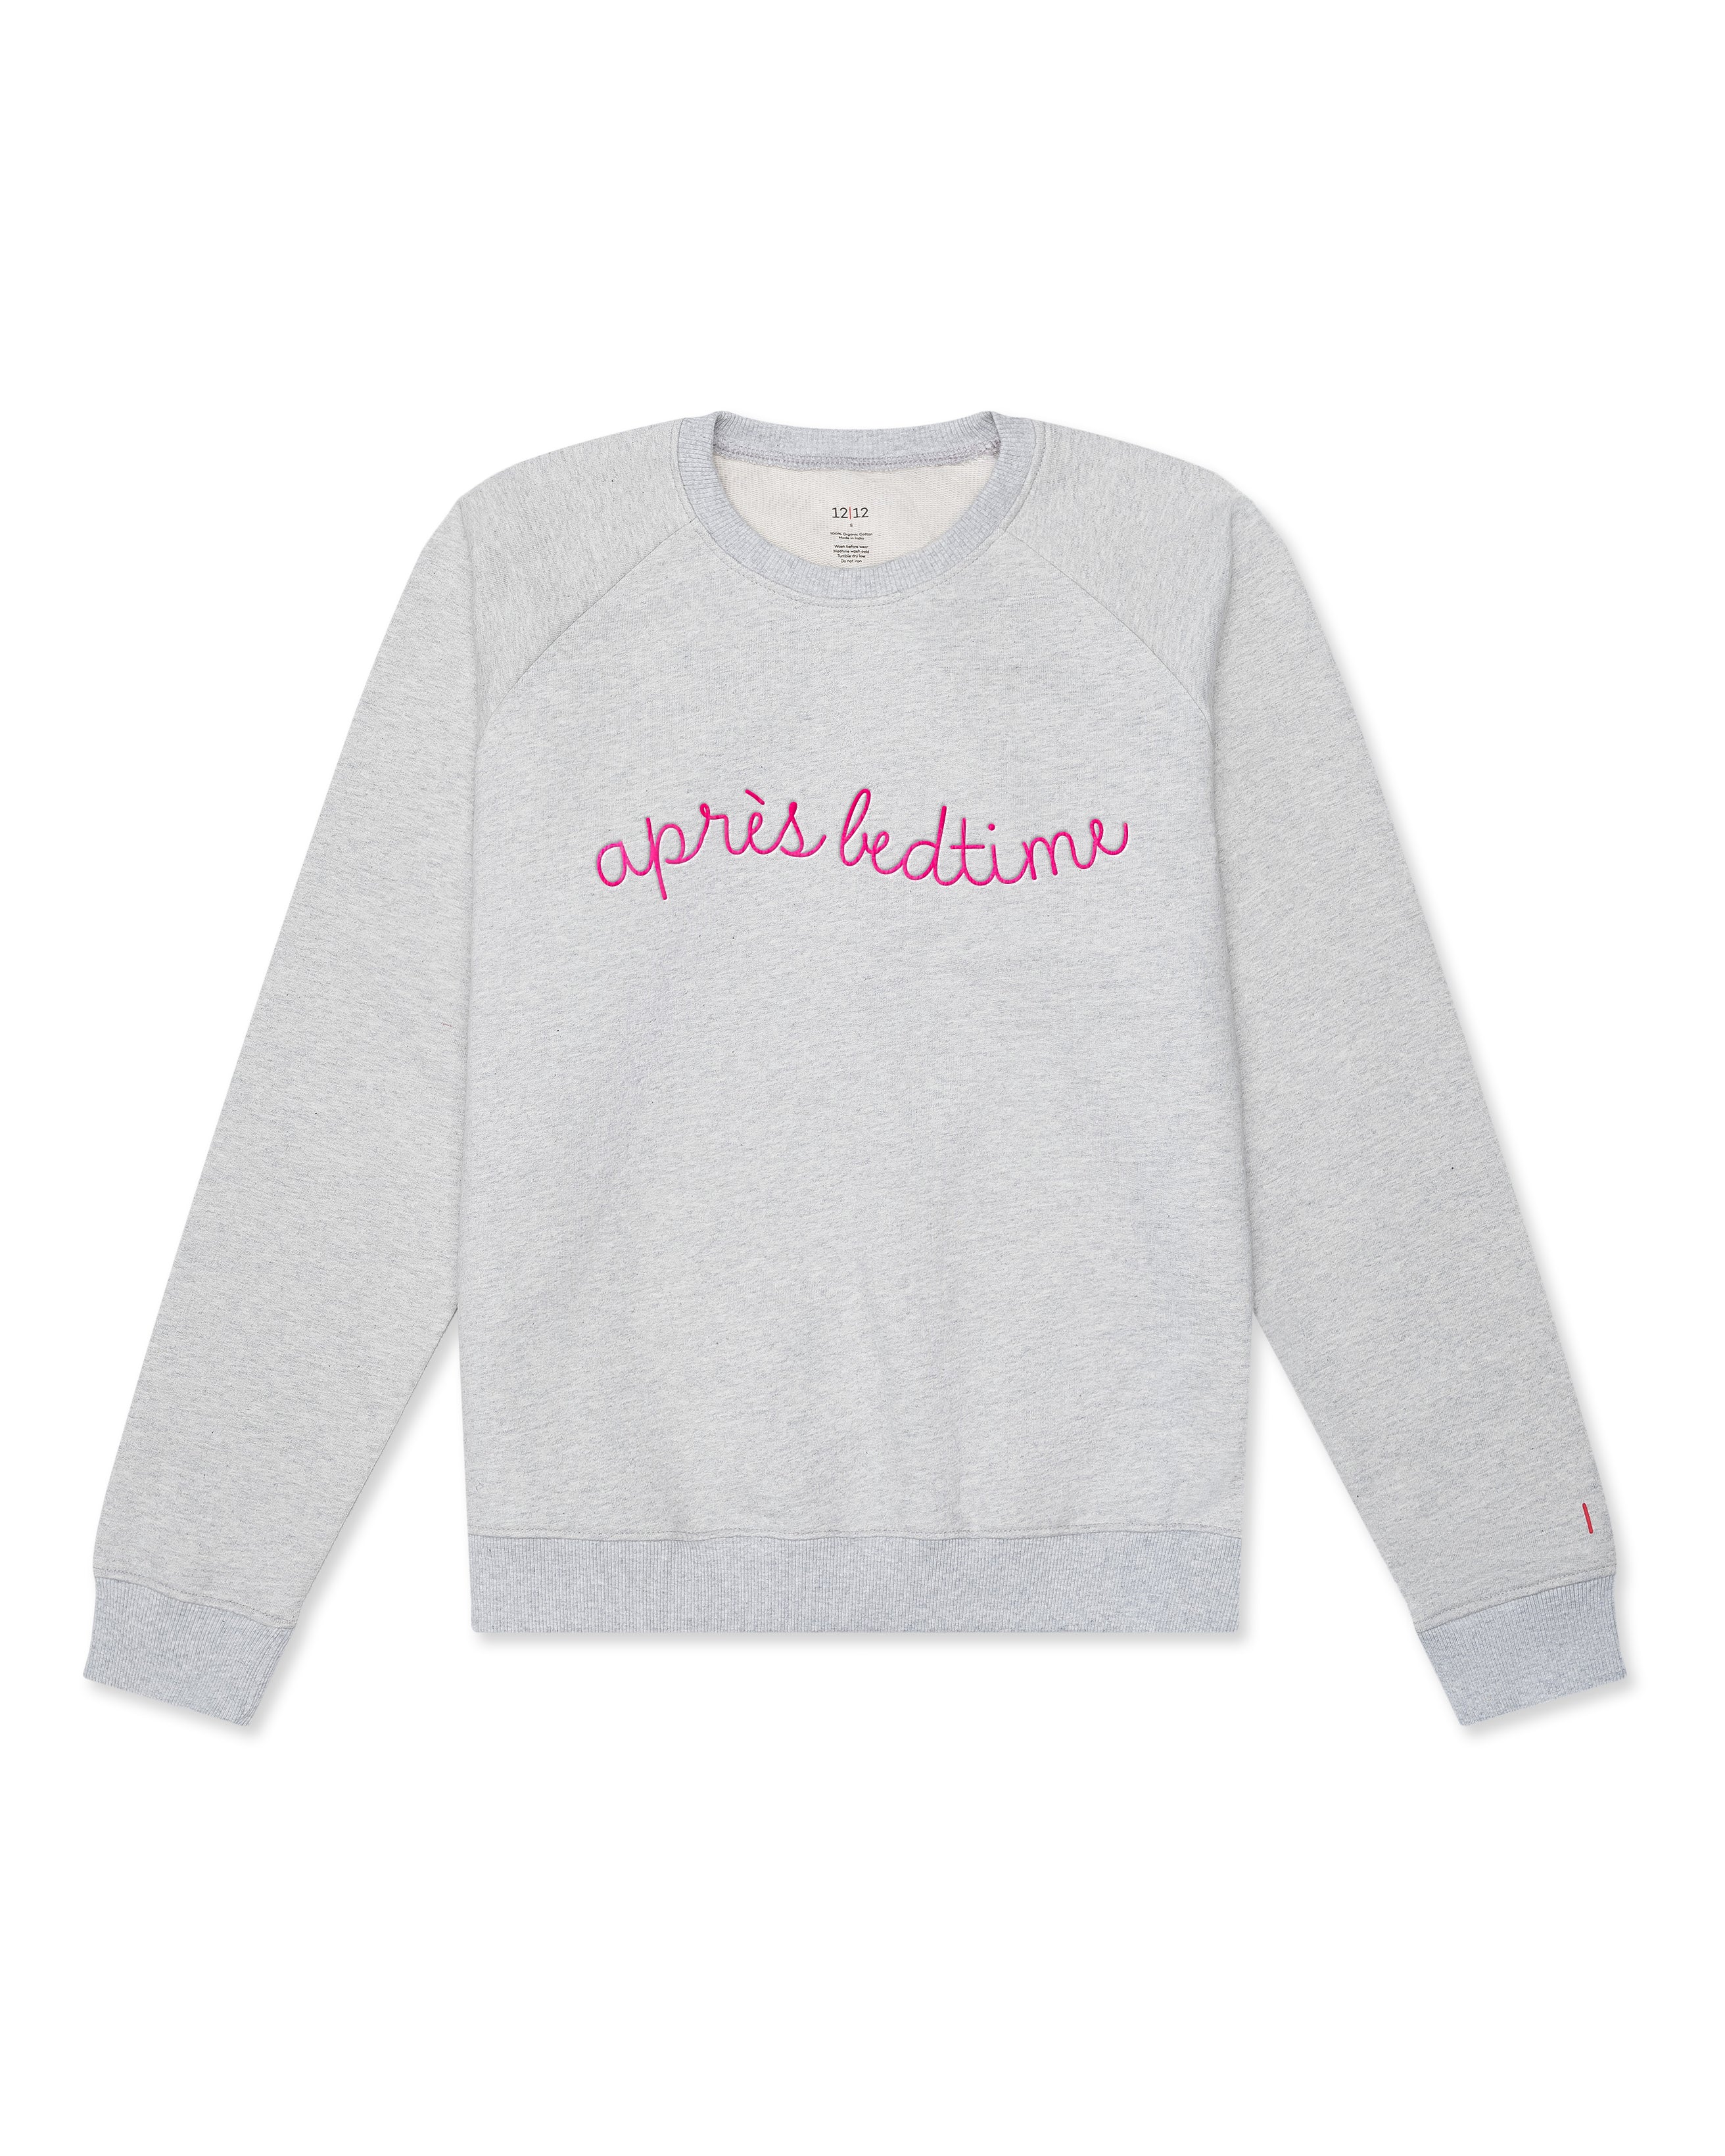 Women's Organic Embroidered Pullover Sweatshirt [Light Heather Grey Apres Bedtime]